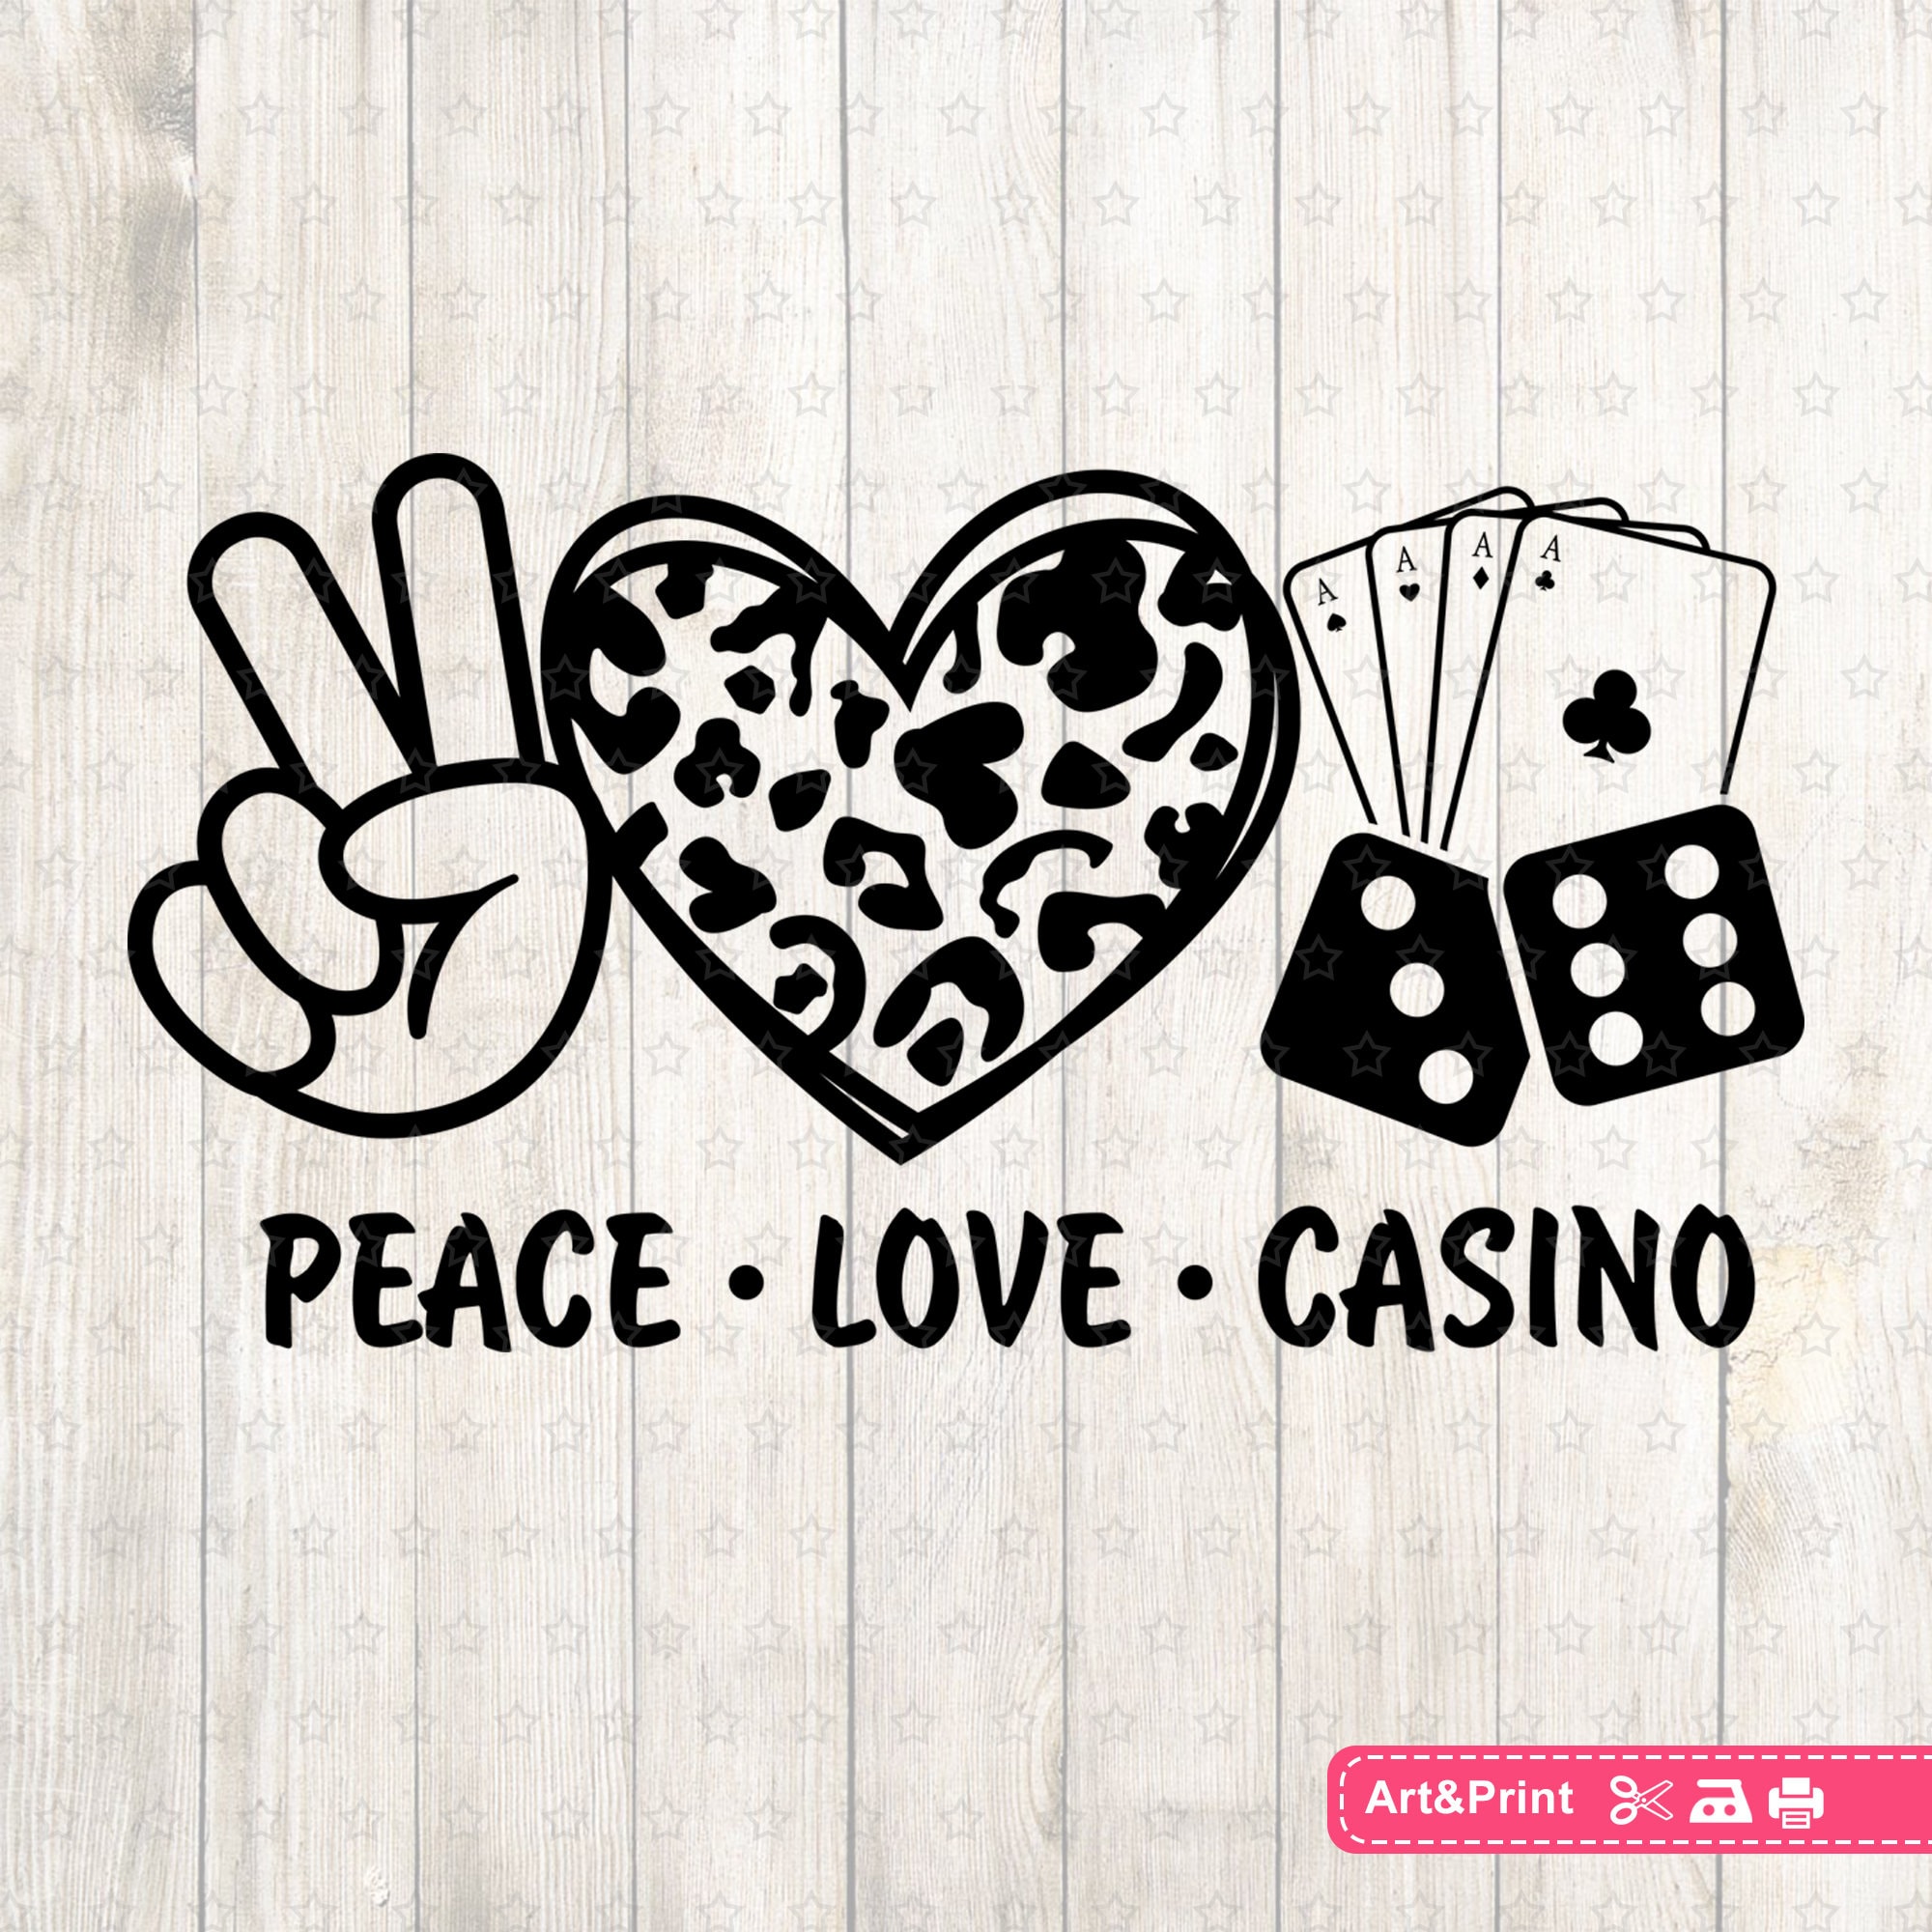 phlove.link/phlove-online-casino/